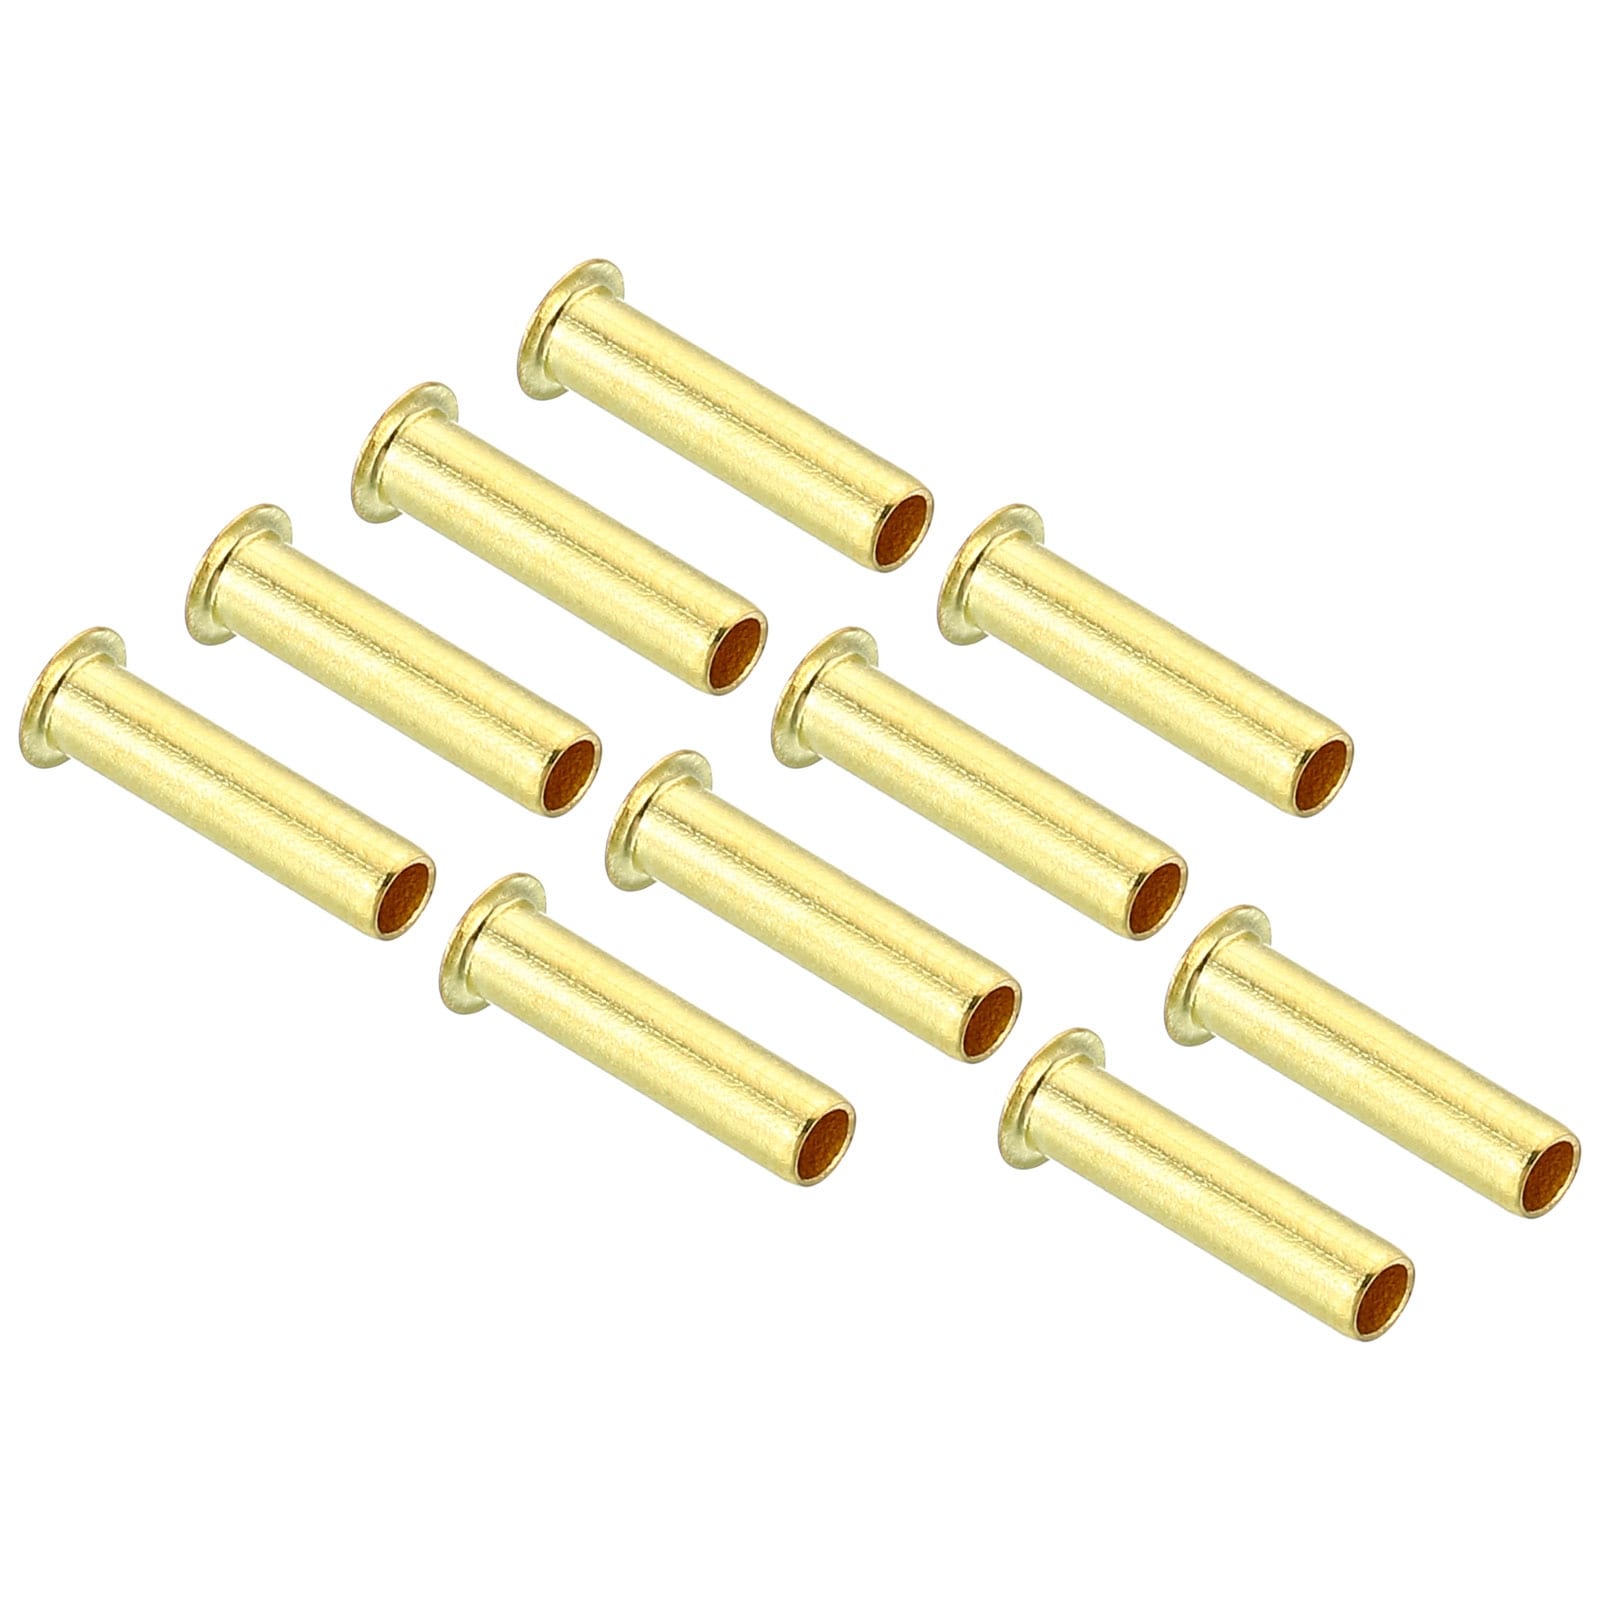 30pcs Brass Compression Sleeves Insert Brass Ferrule Fitting - Brass Tone -  On Sale - Bed Bath & Beyond - 37524020